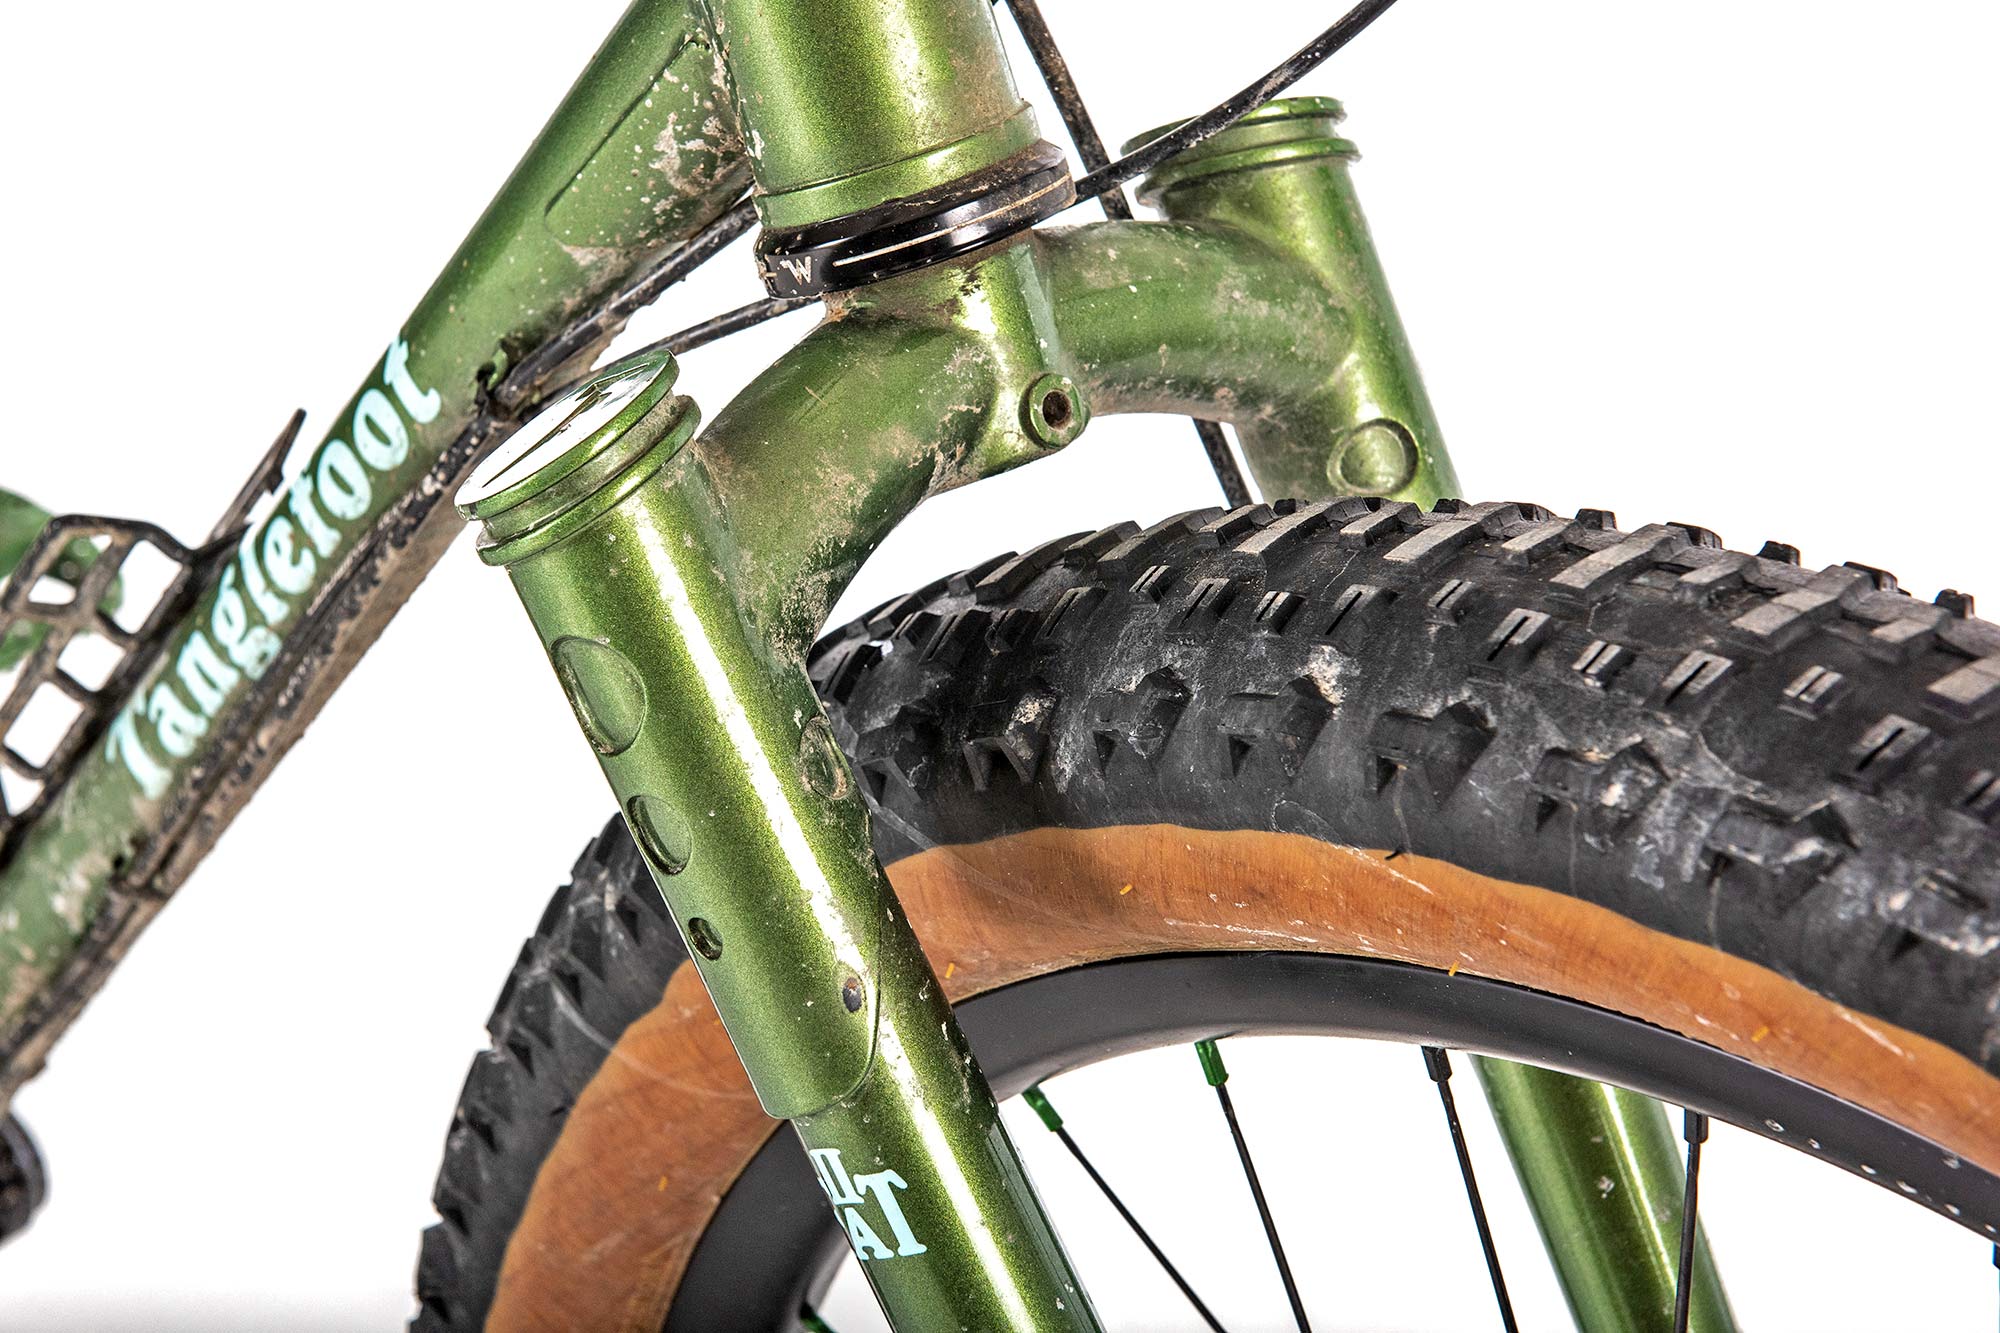 Tanglefoot Moonshiner MTB, 27.5+ rigid steel dropbar adventure touring bikepacking mountain bike, front tire